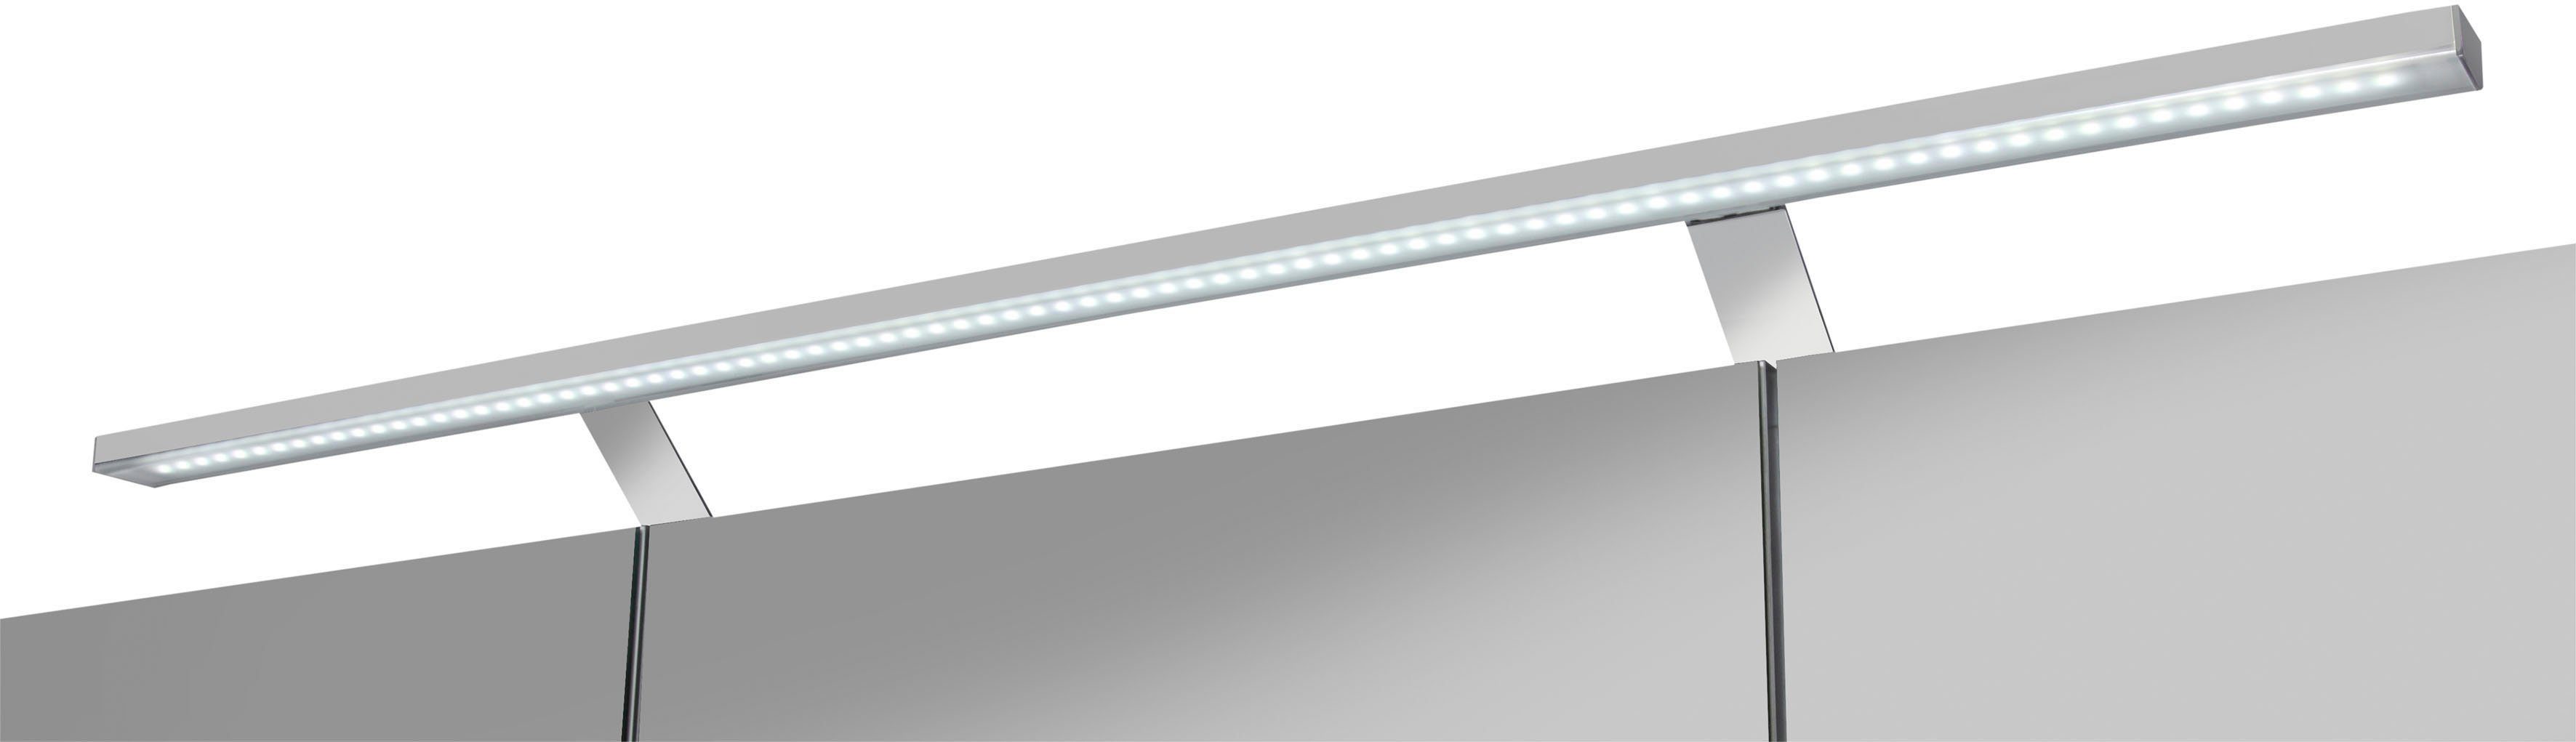 welltime Spiegelschrank Schalter-/Steckdosenbox 3-türig, basaltgrau basaltgrau 100 cm, LED-Beleuchtung, Torino Breite 